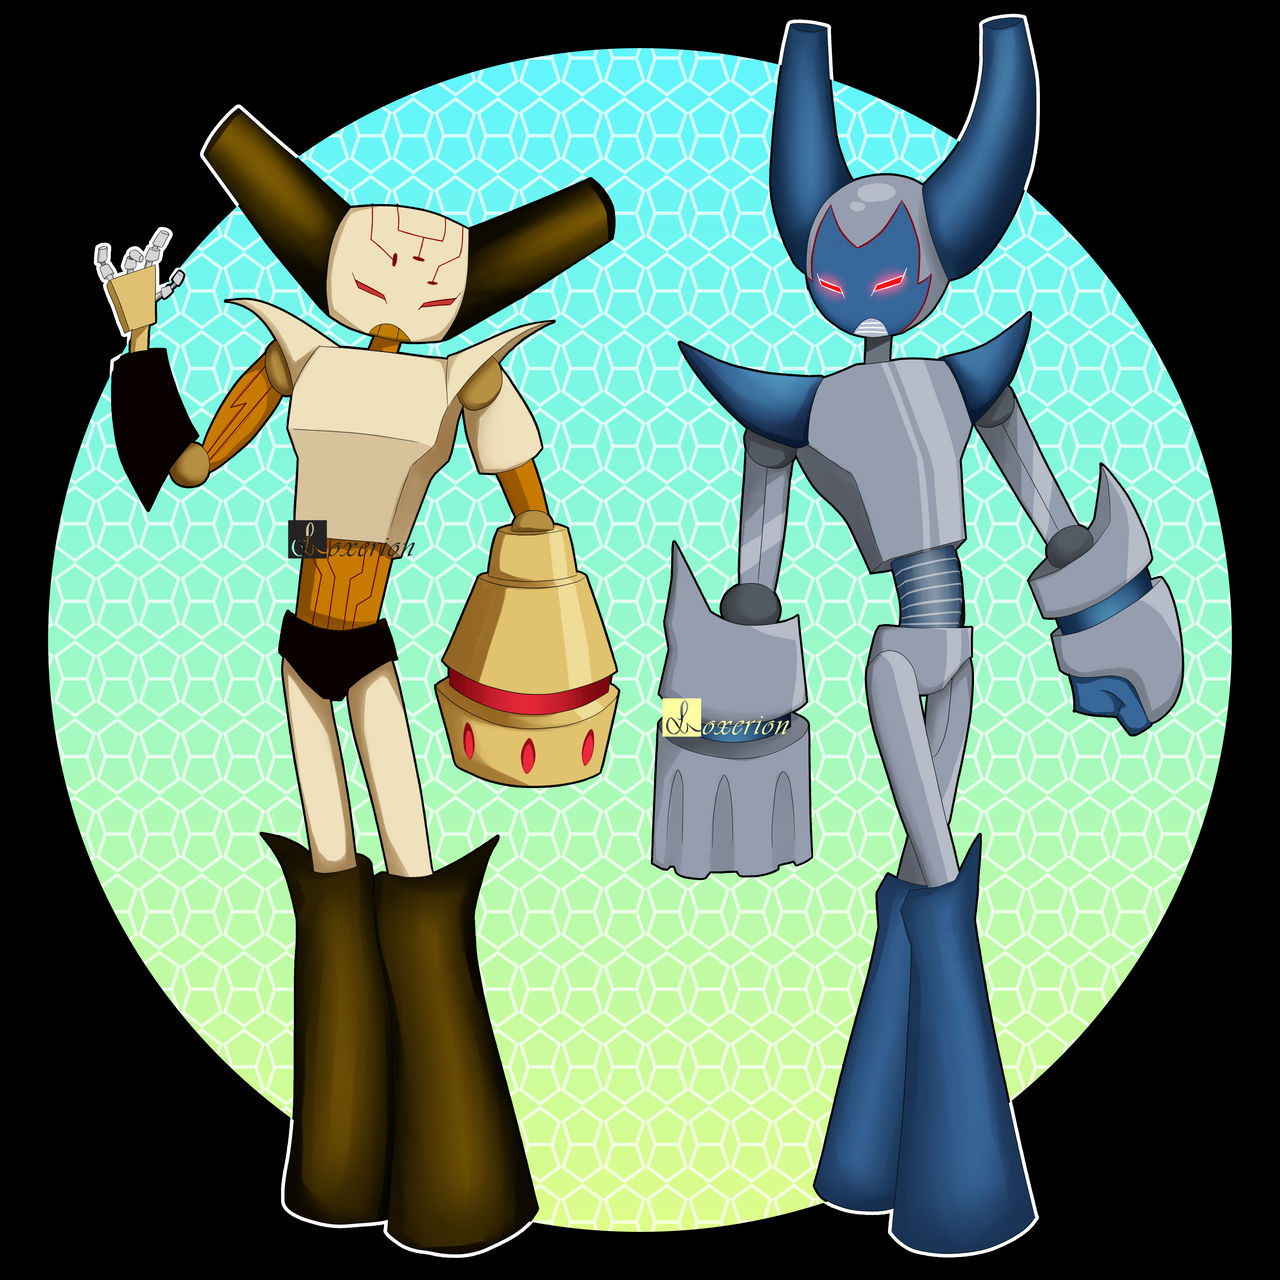 Protoboy and Protogirl by KatMaz on DeviantArt